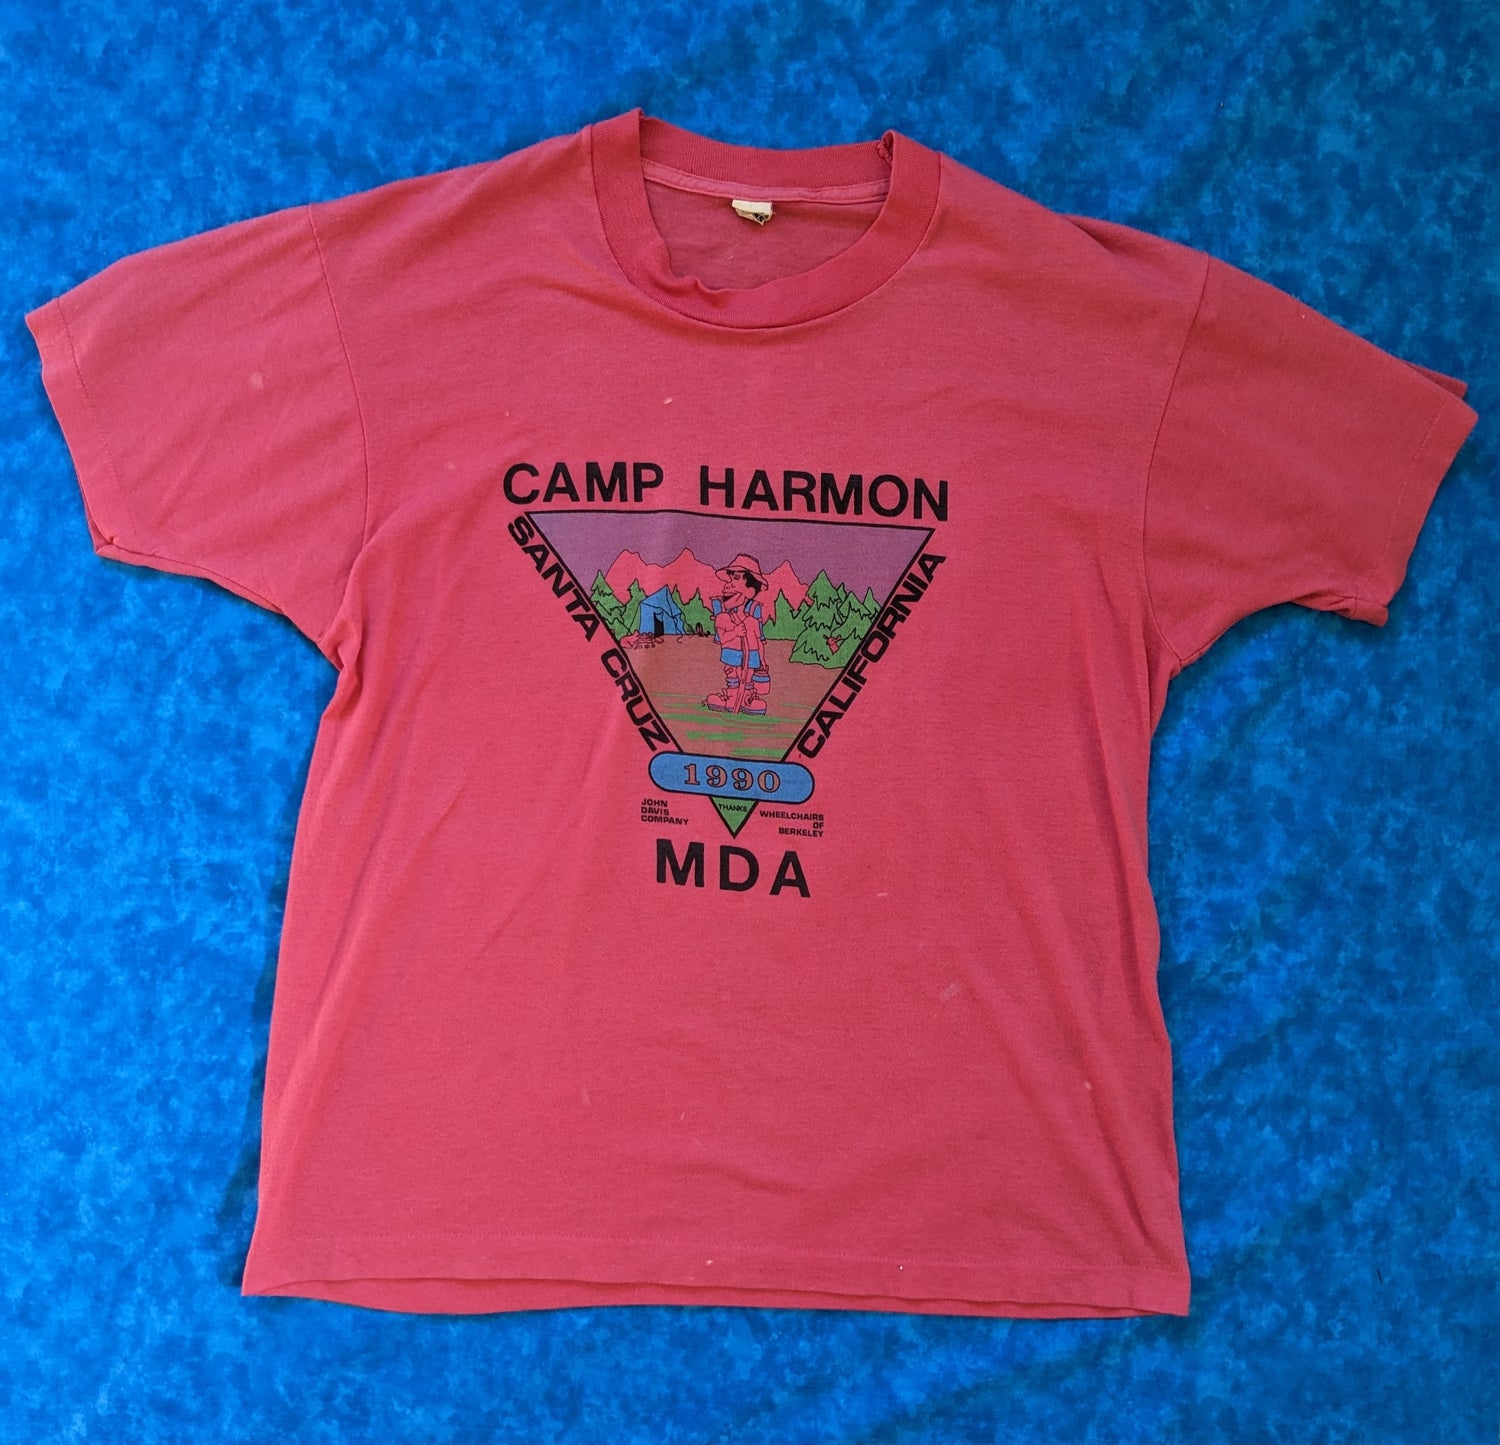 Pink Camp Harmon Santa Cruz California 1990 Shirt